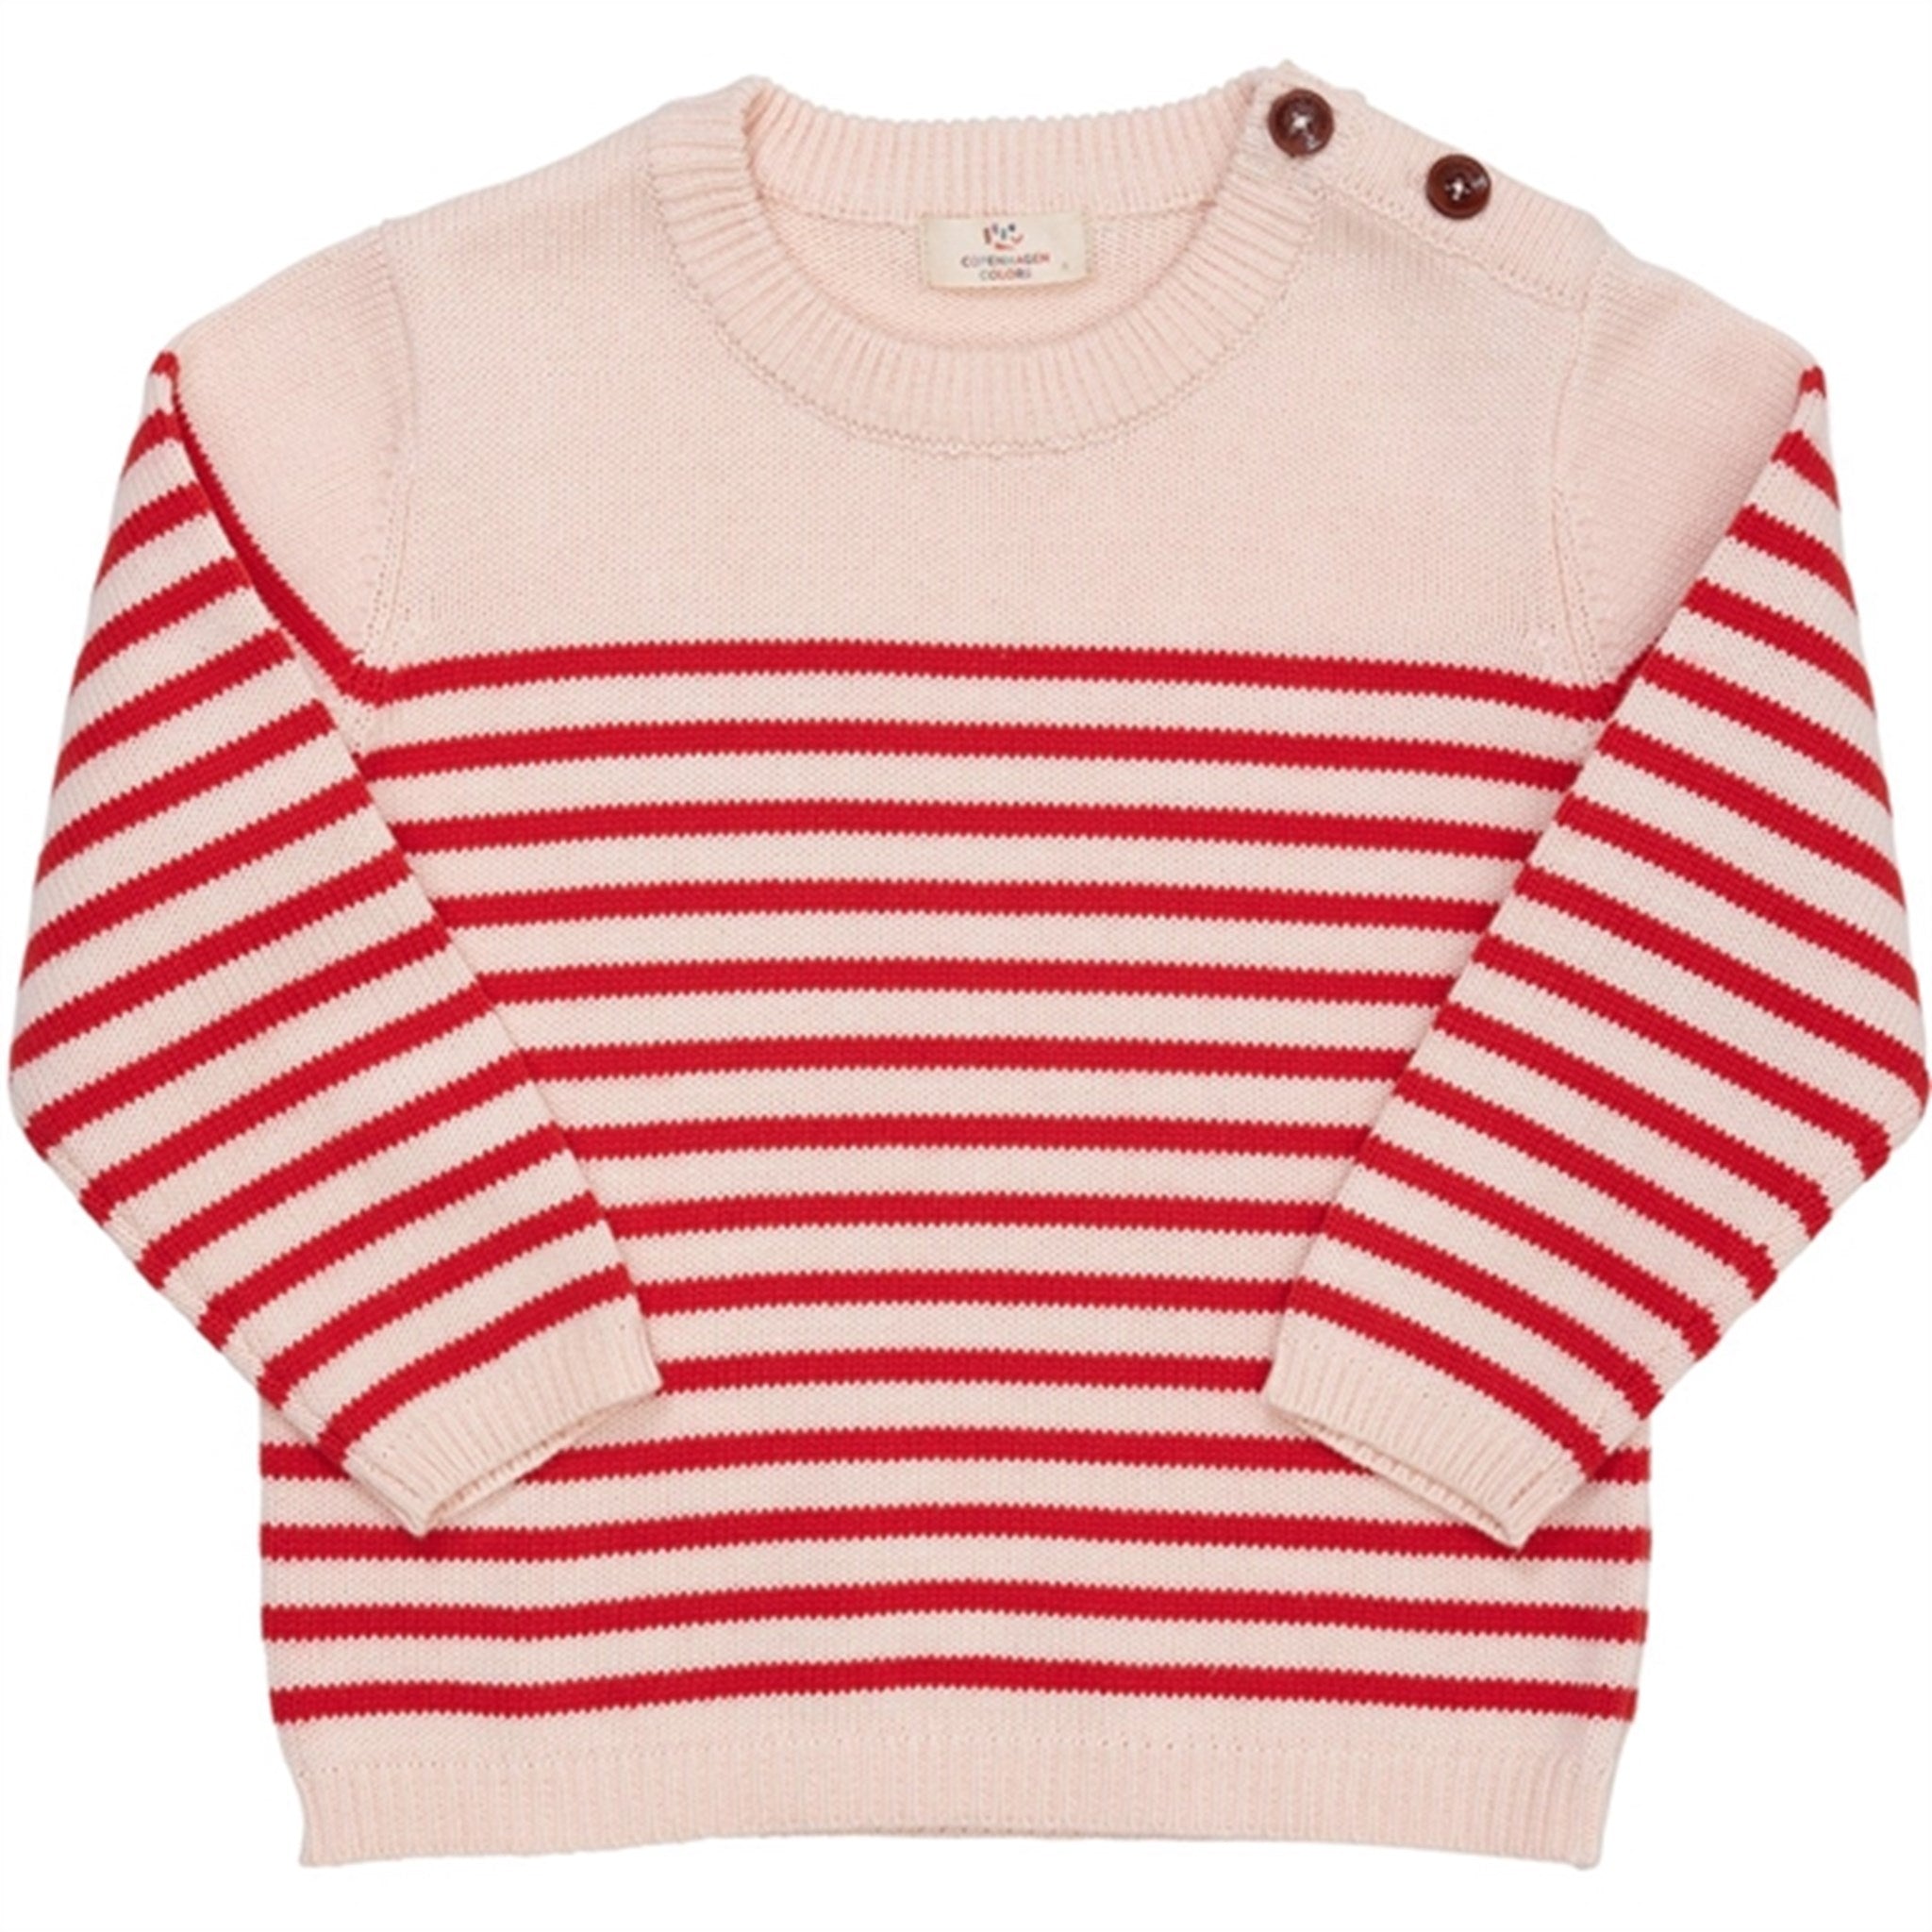 Copenhagen Colors Dusty Rose/Red Comb. Strikk Sailor Stripe Sweater